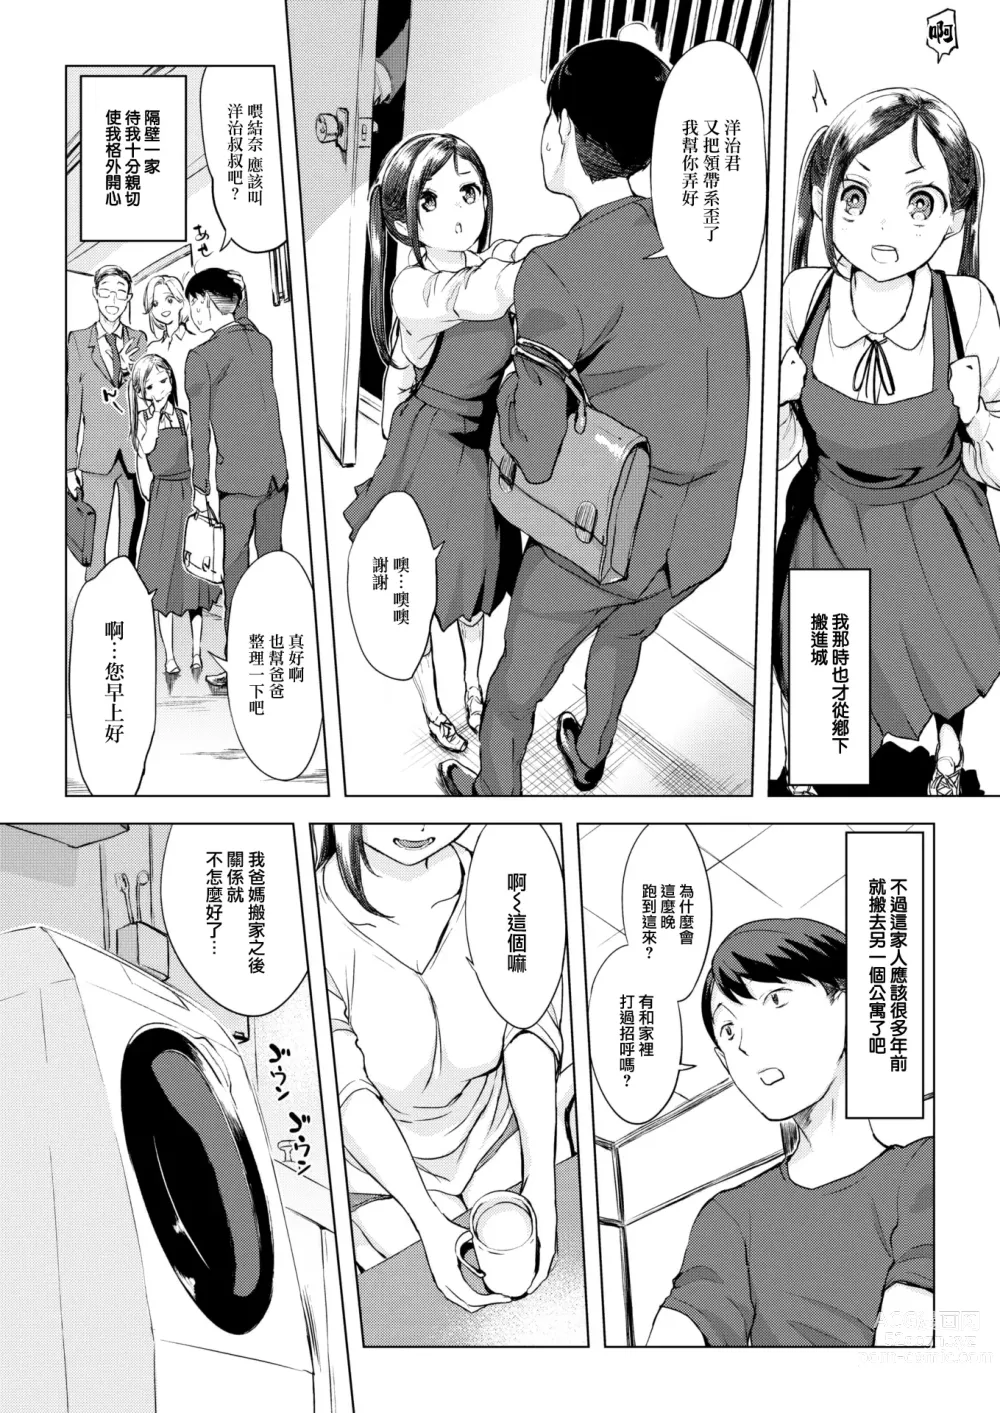 Page 4 of manga Ame no Yoru ni…